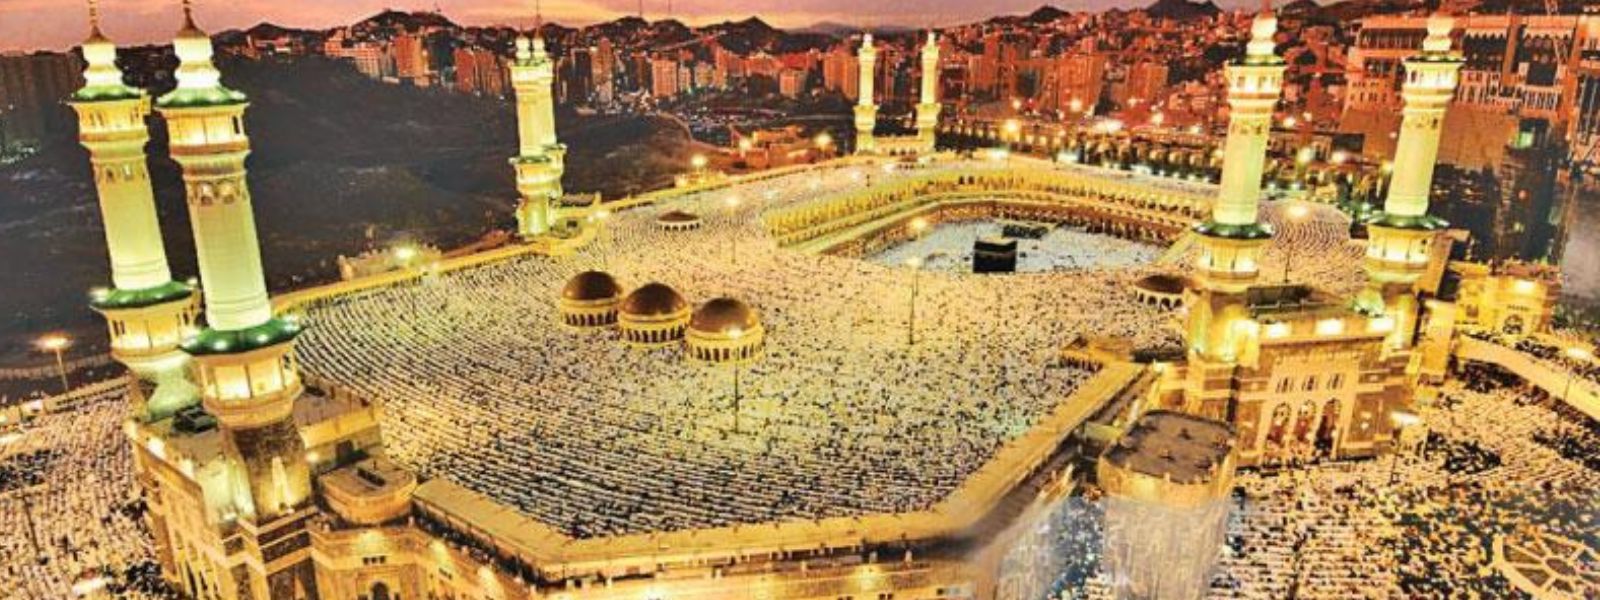 Muslims across the world celebrate Hajj